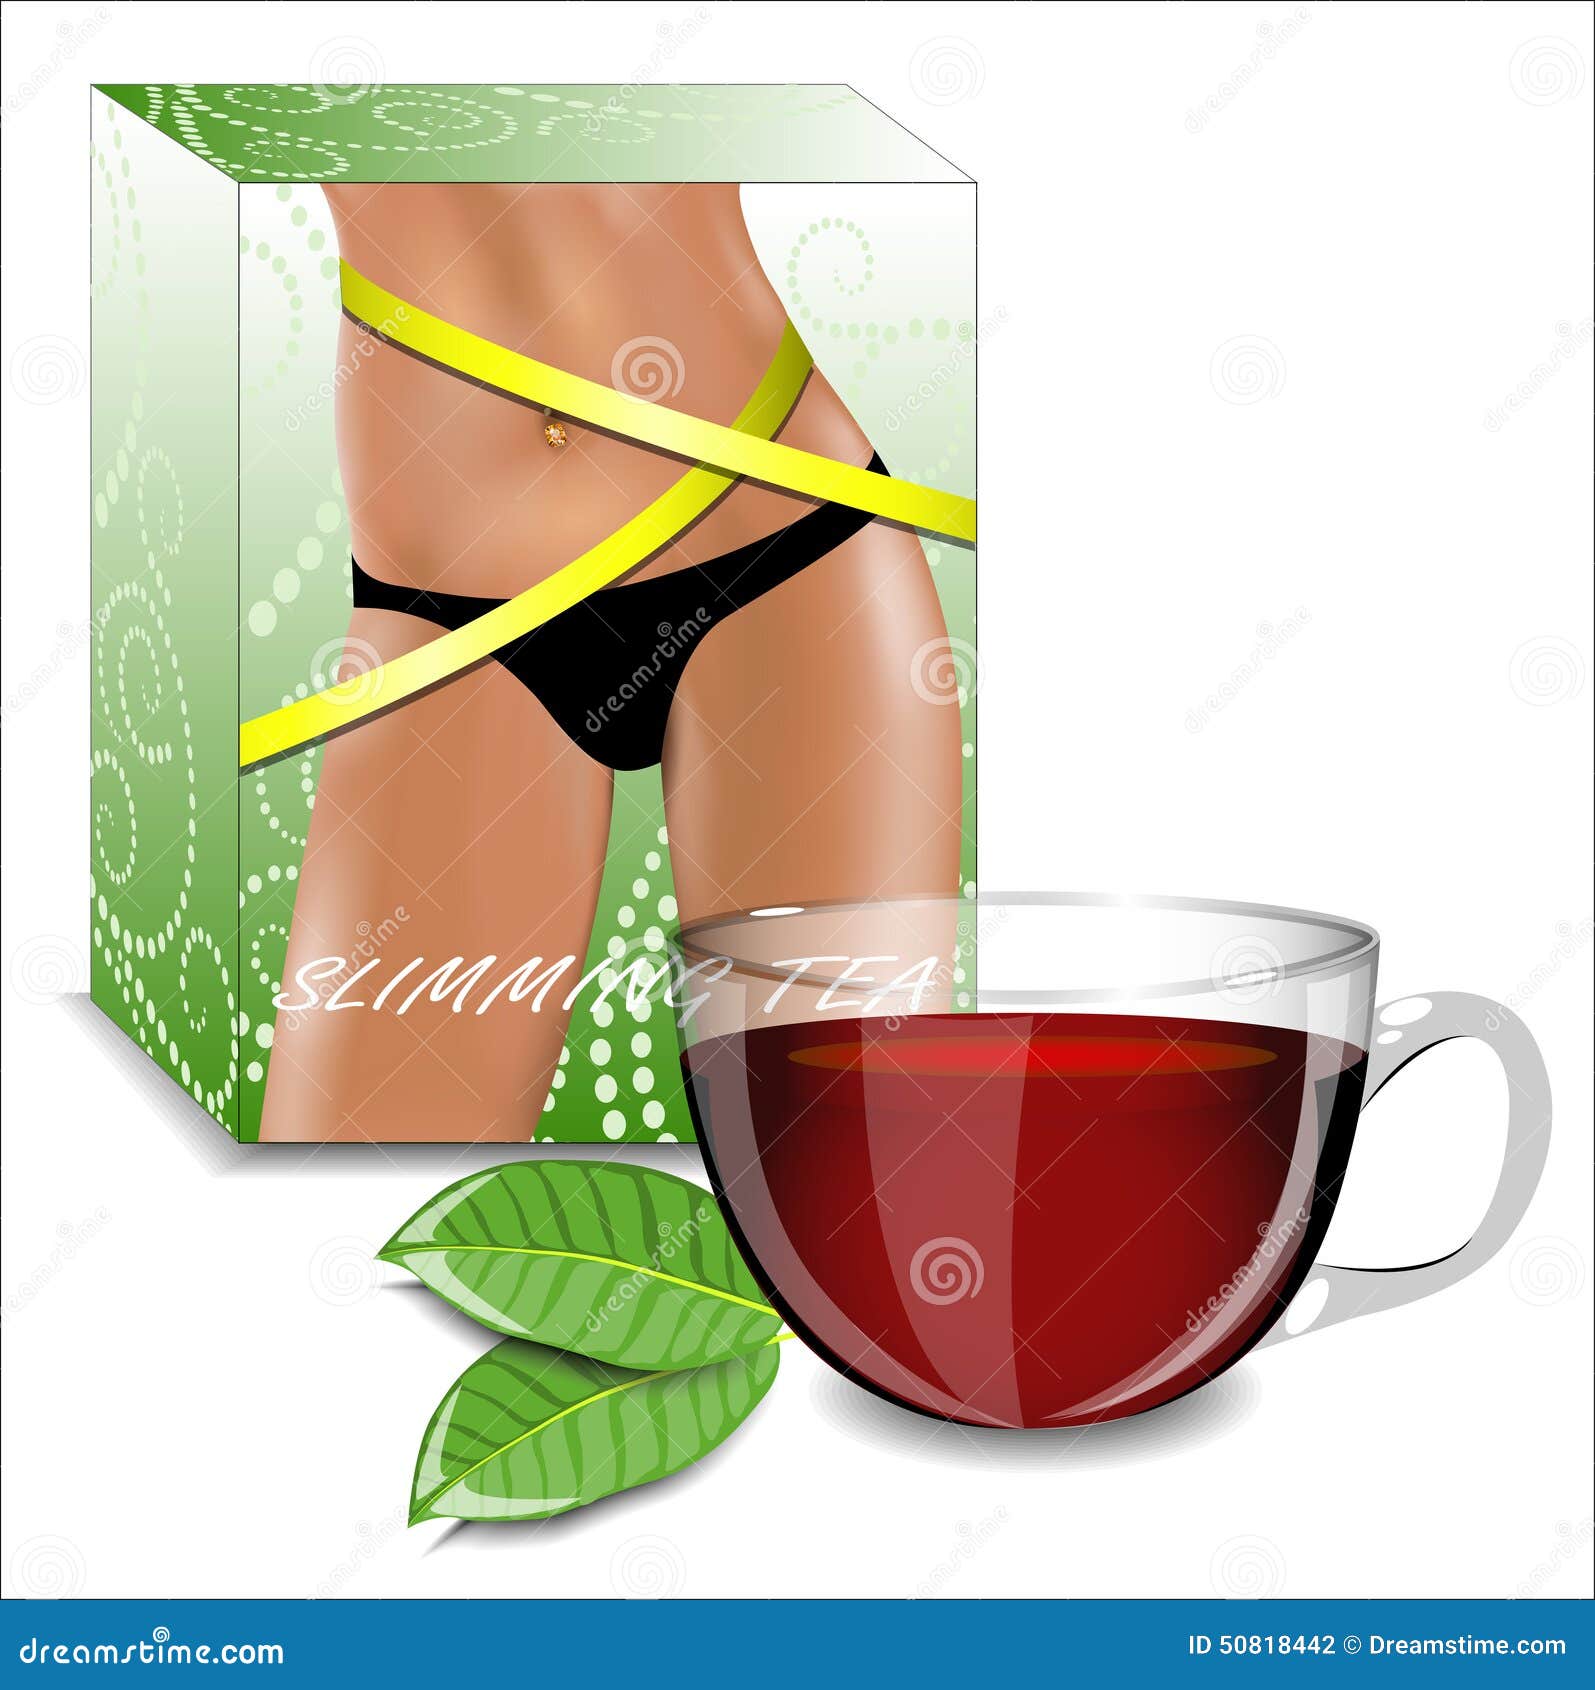 https://thumbs.dreamstime.com/z/slimming-tea-tea-packaging-image-shapely-female-hip-hips-50818442.jpg